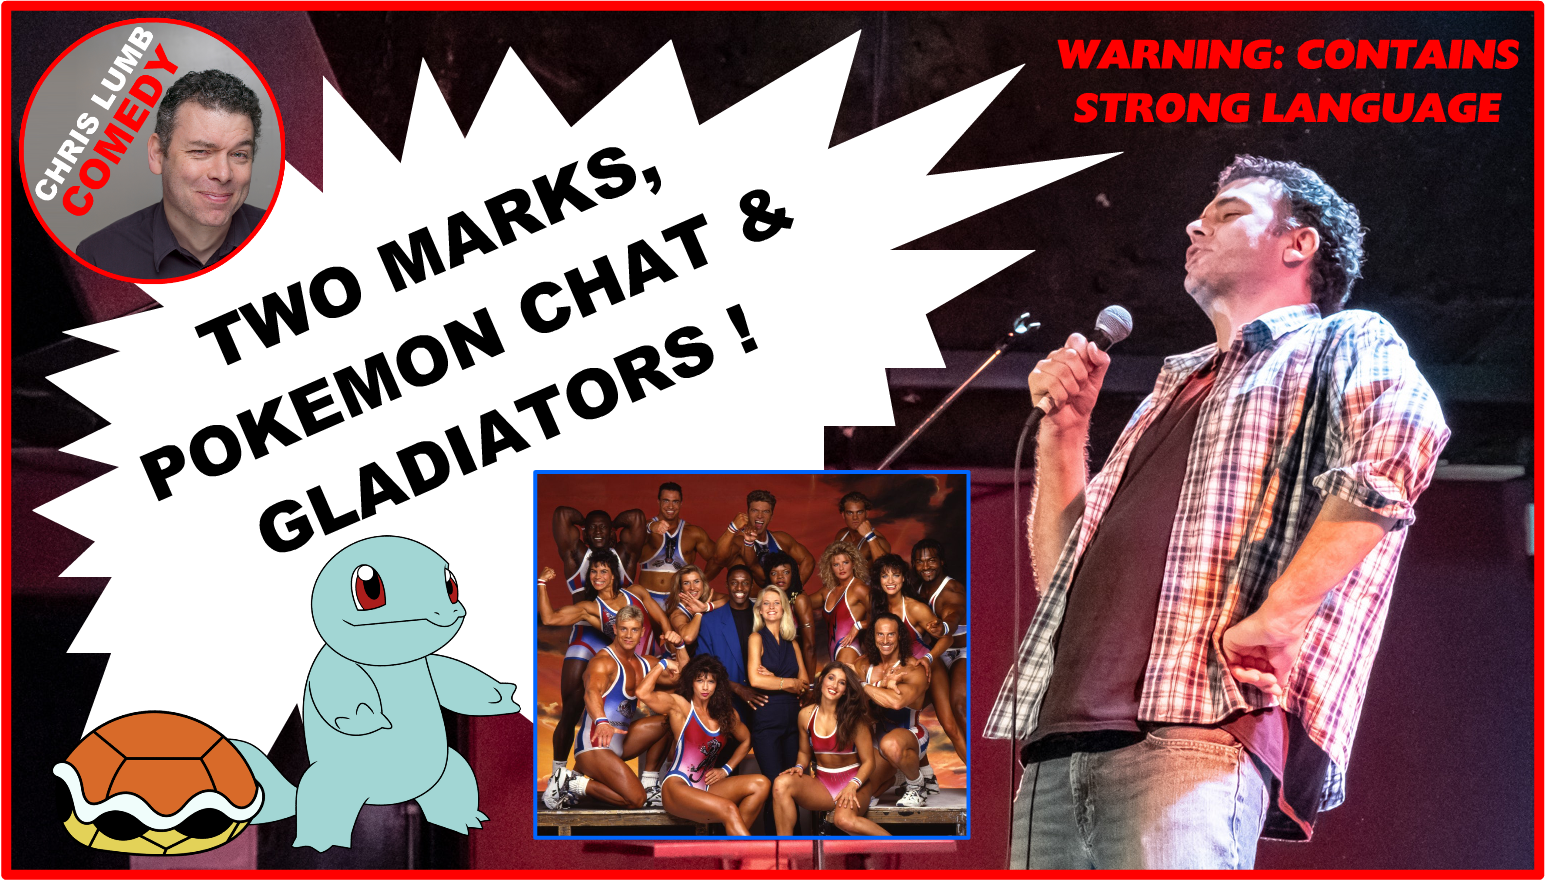 Chris Lumb Comedy "Two Marks, Pokemon and Gladiators"